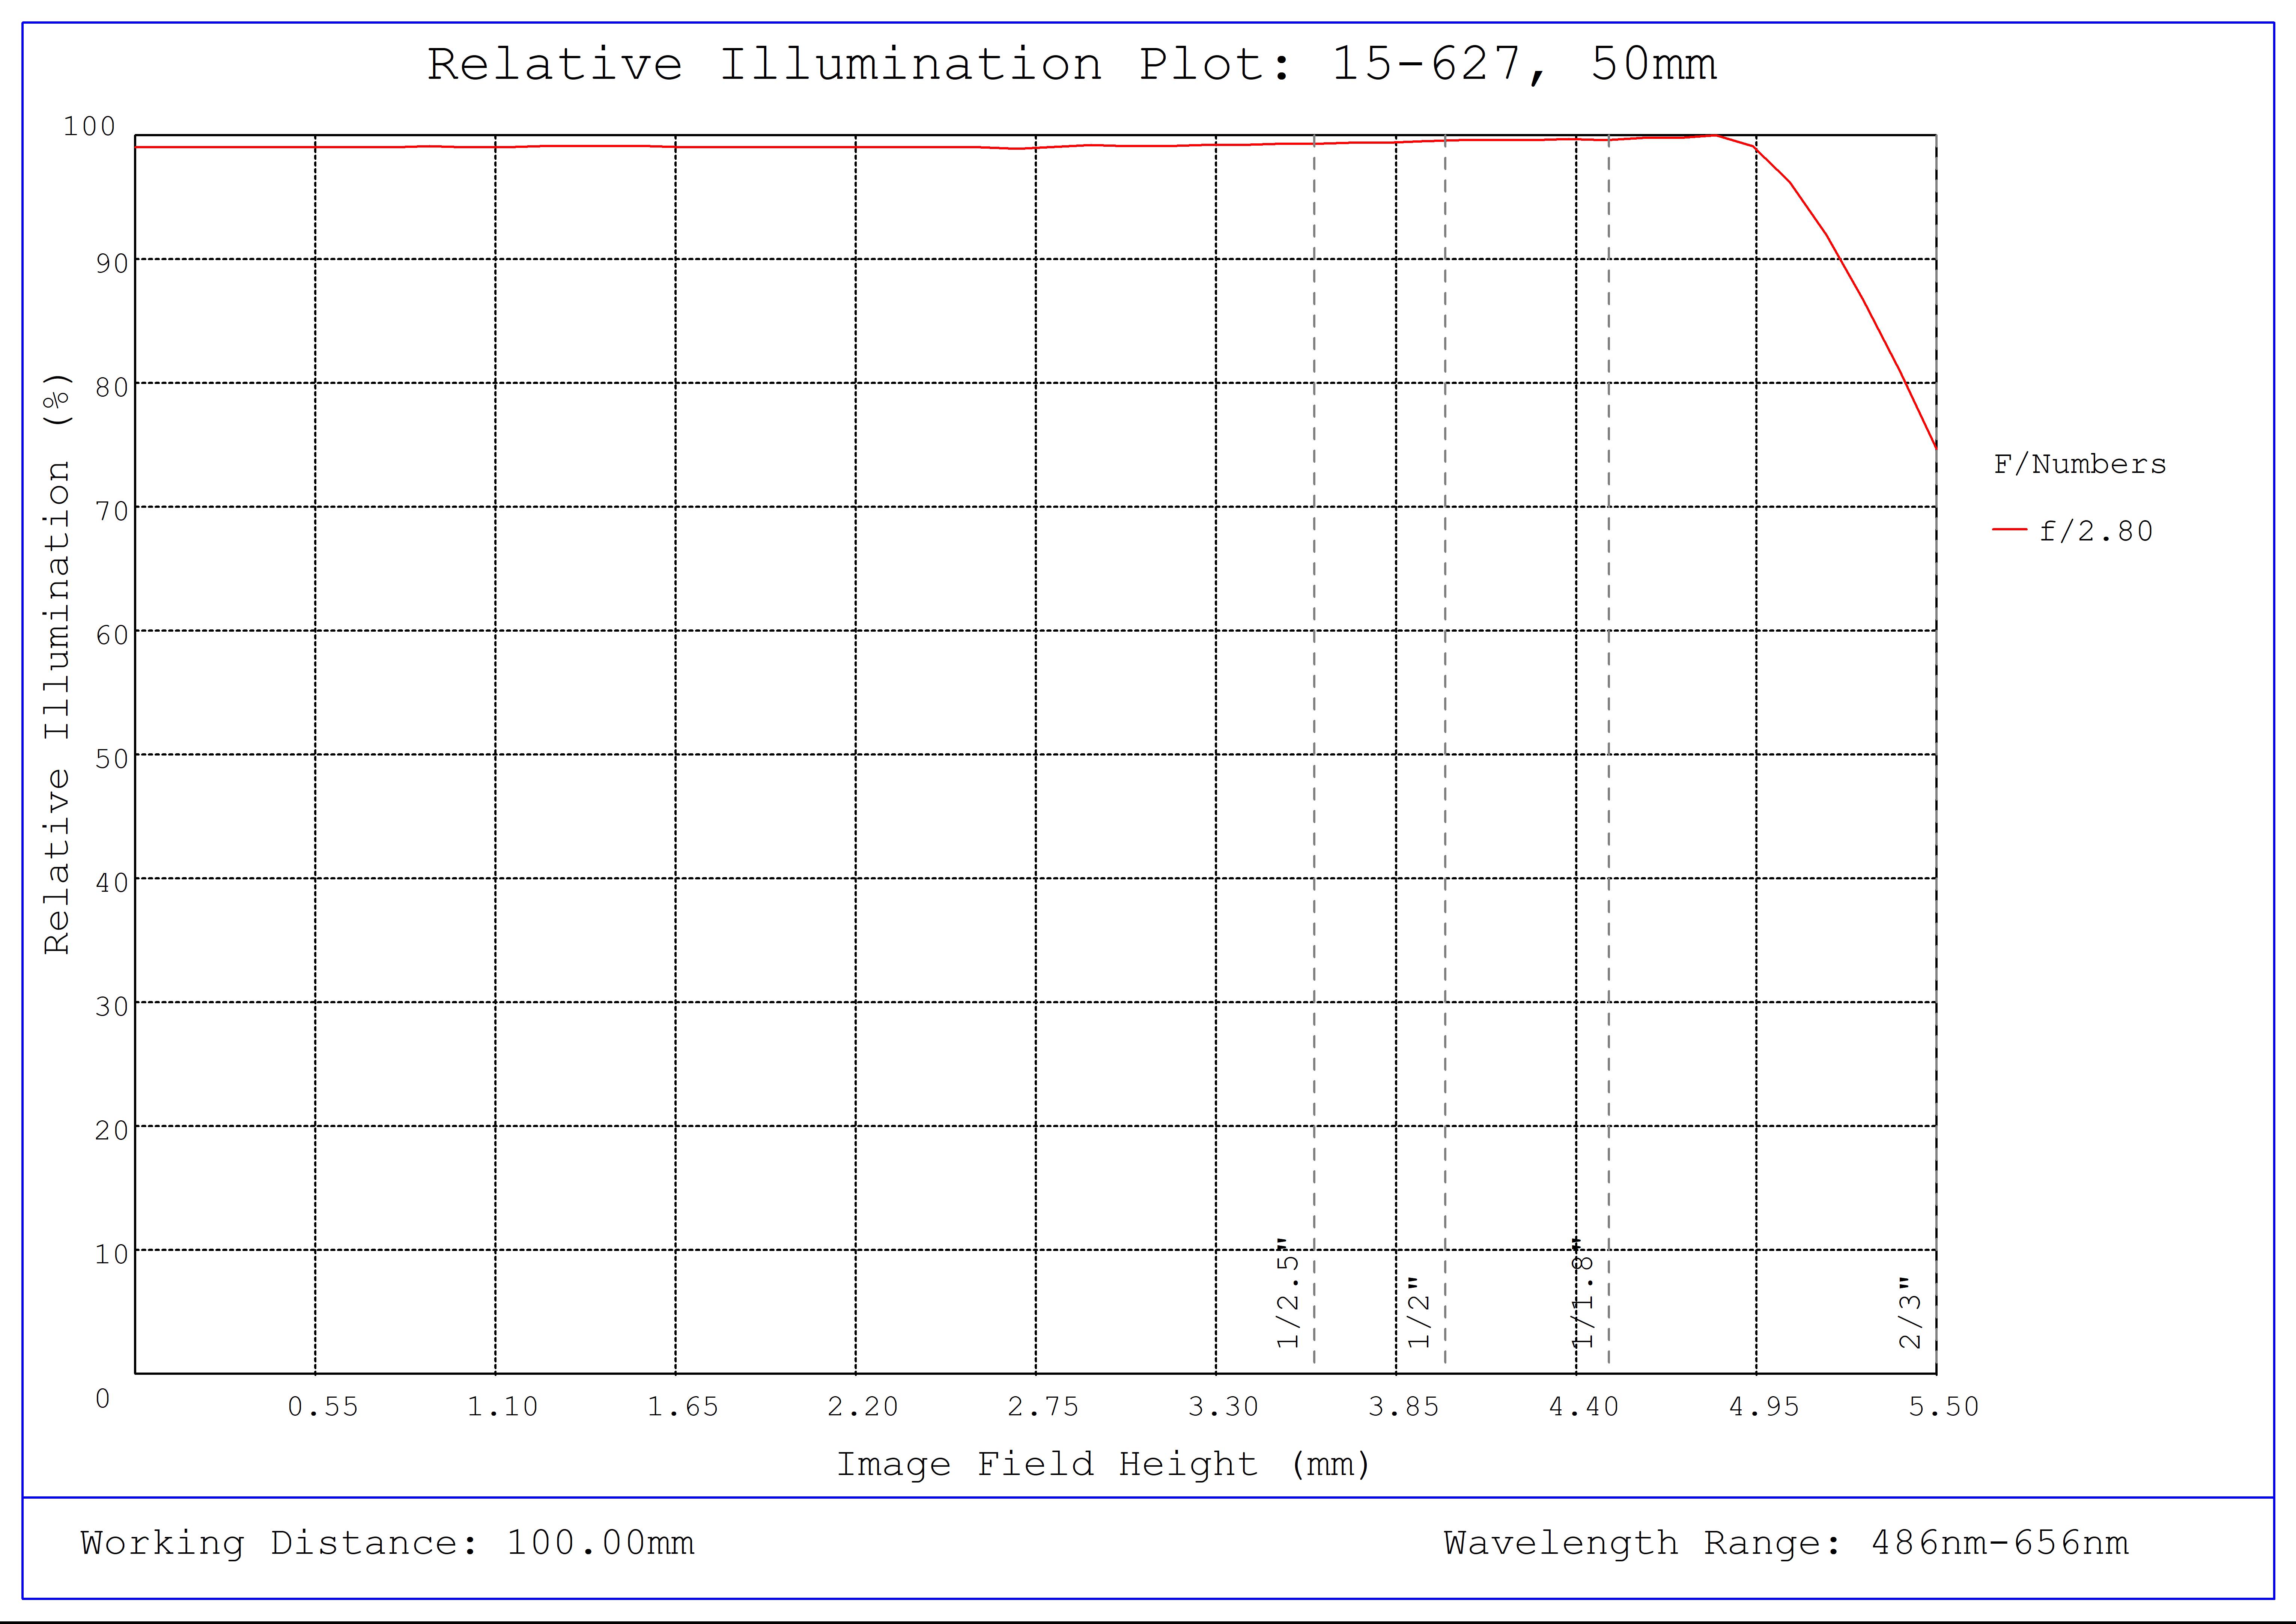 #15-627, 8.5mm, f/2.8 Cw Series Fixed Focal Length Lens, Relative Illumination Plot